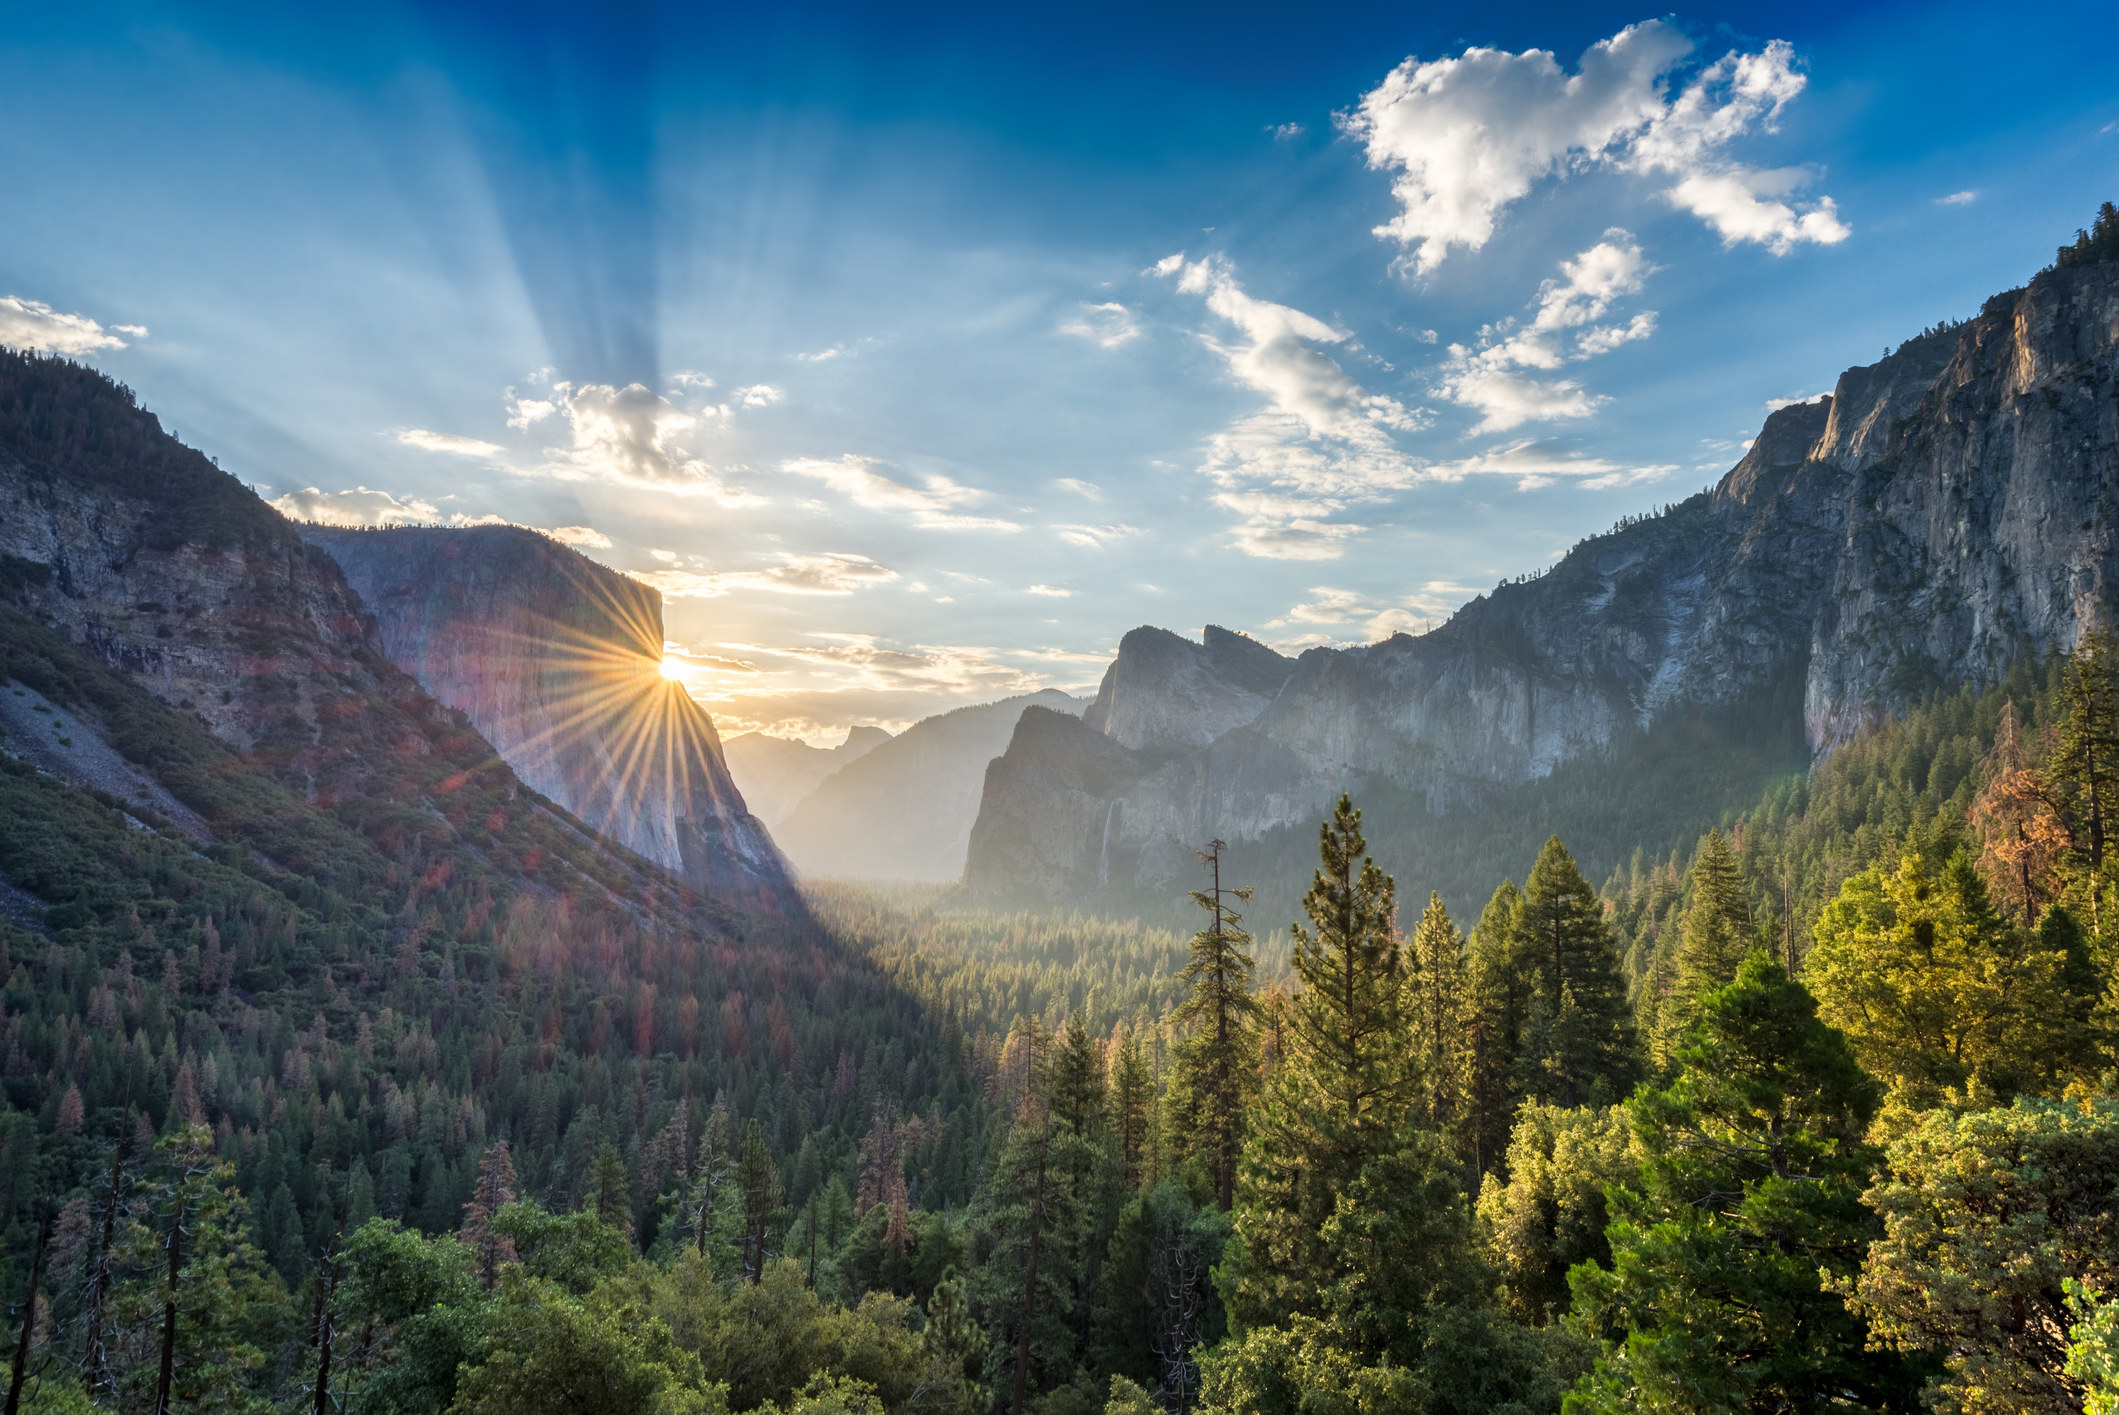 Sunrise at Yosemite National Park.